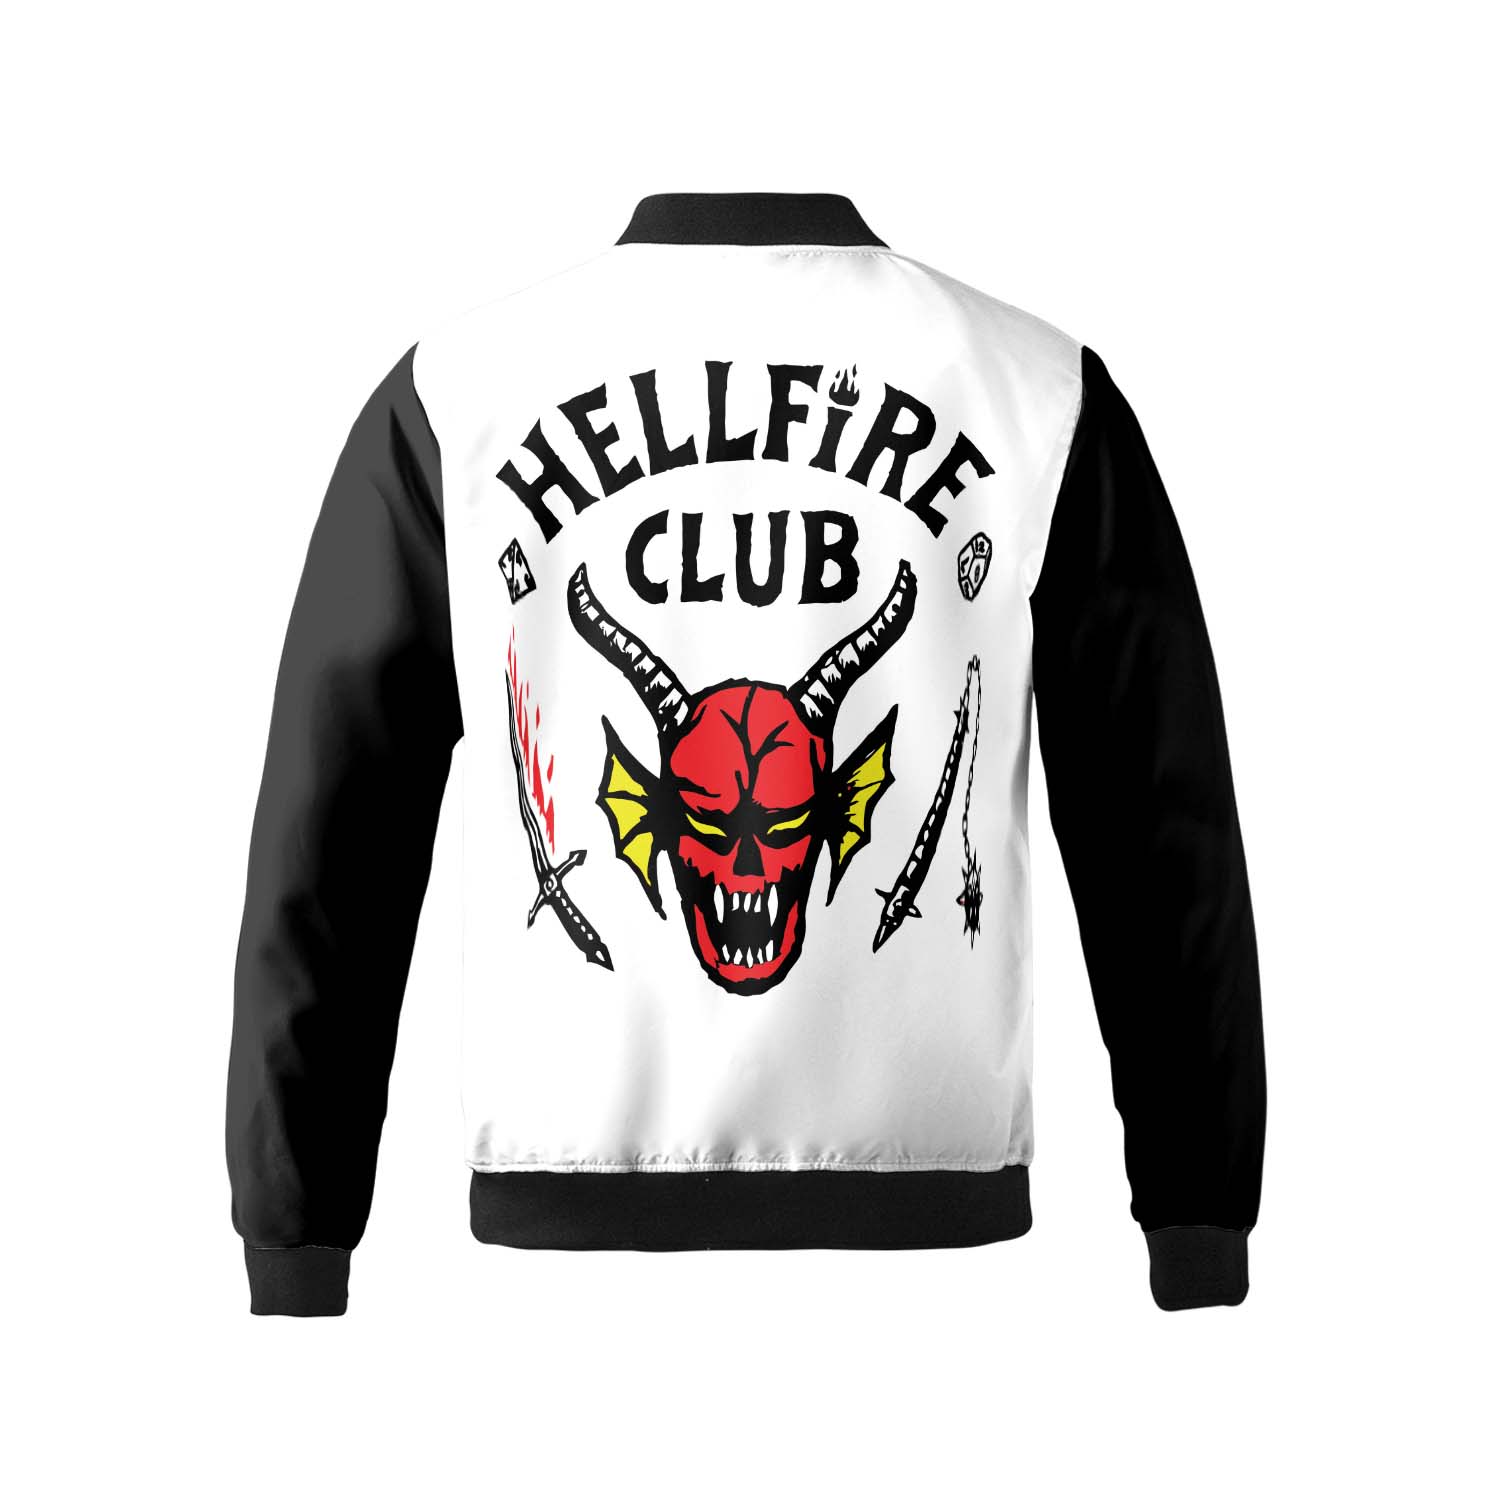 Hellfire club bomber jacket - Endastore.com